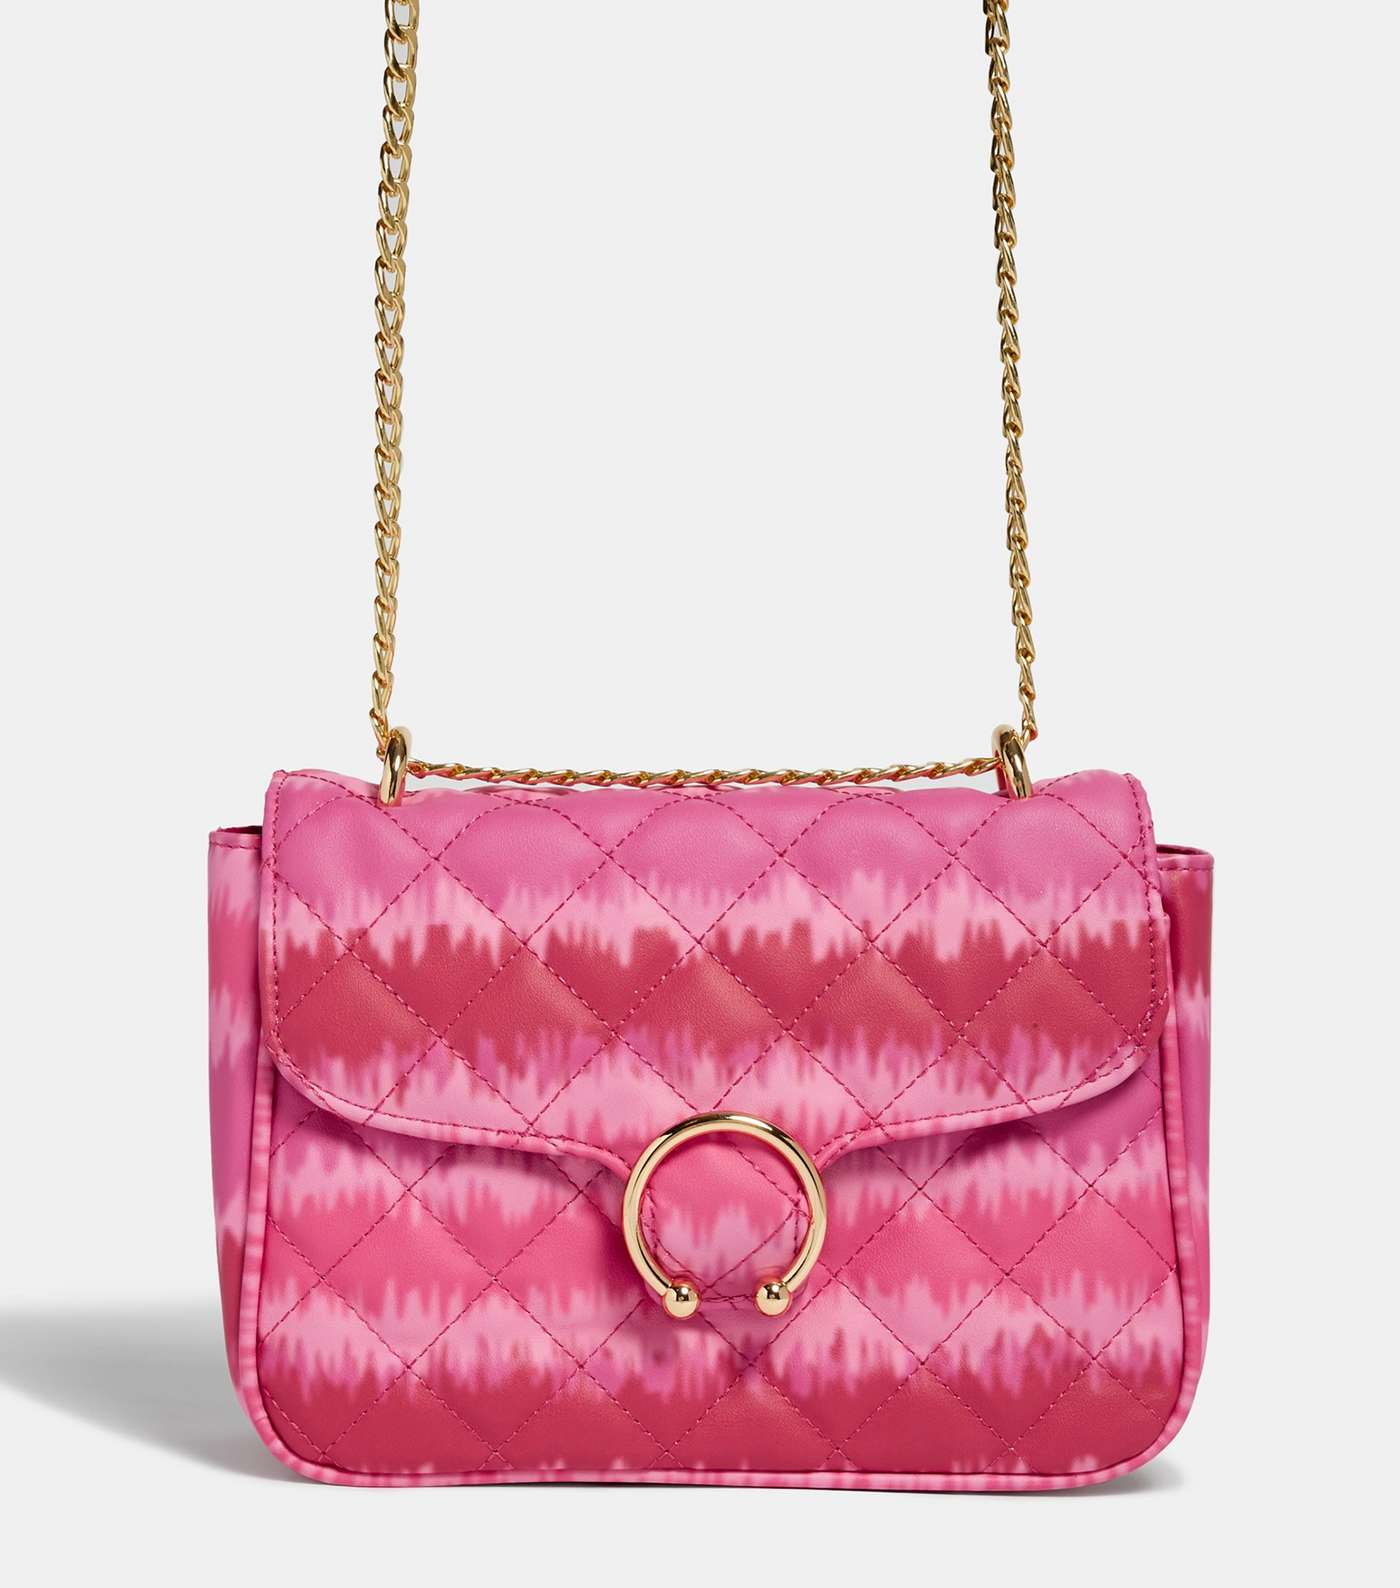 Skinnydip Pink Leather-Look Ombré Cross Body Bag